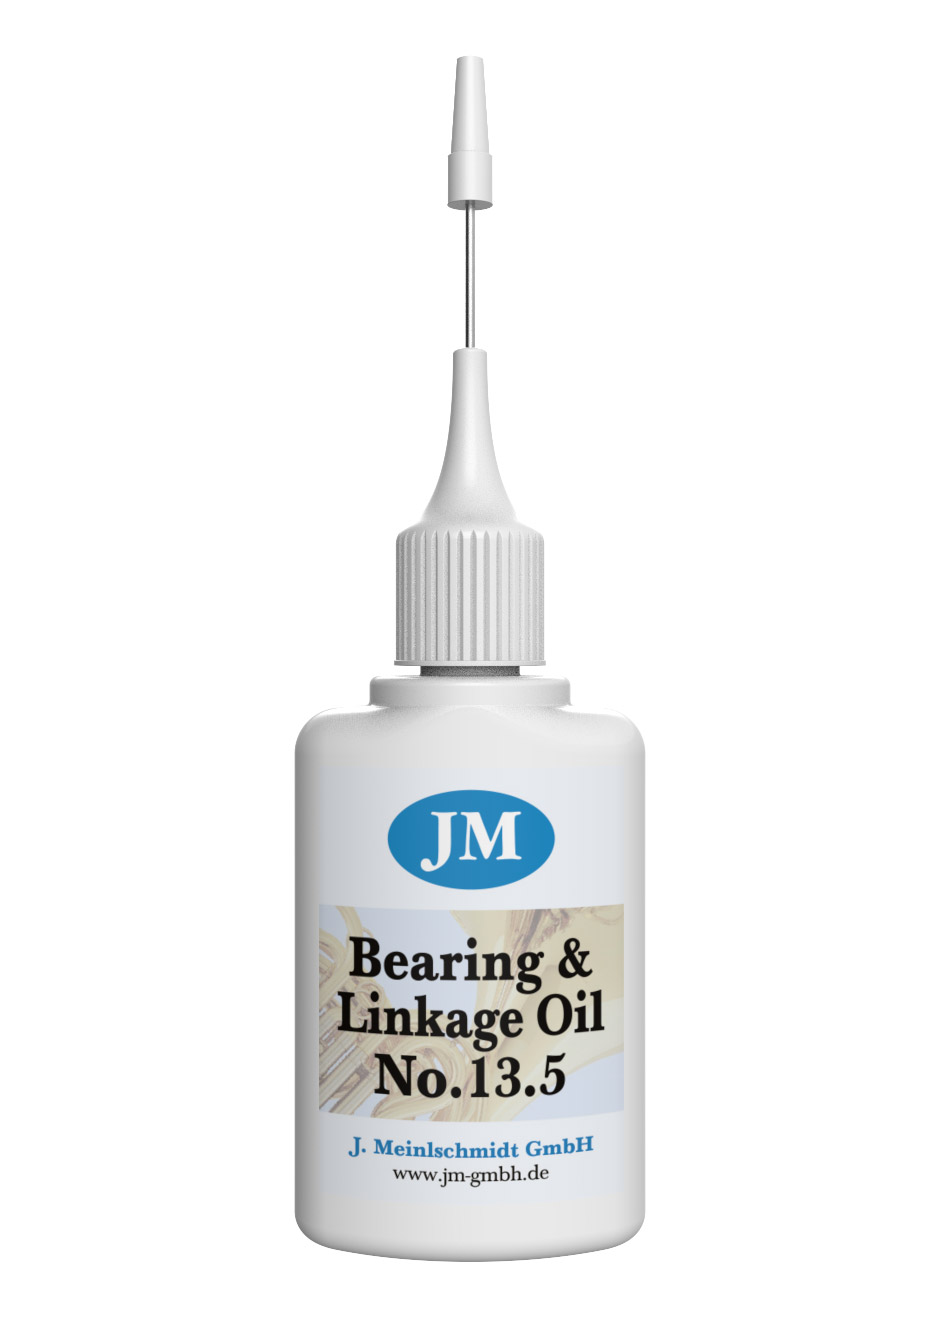 JM Bearing & Linkage Oil 13,5 - Synthetic